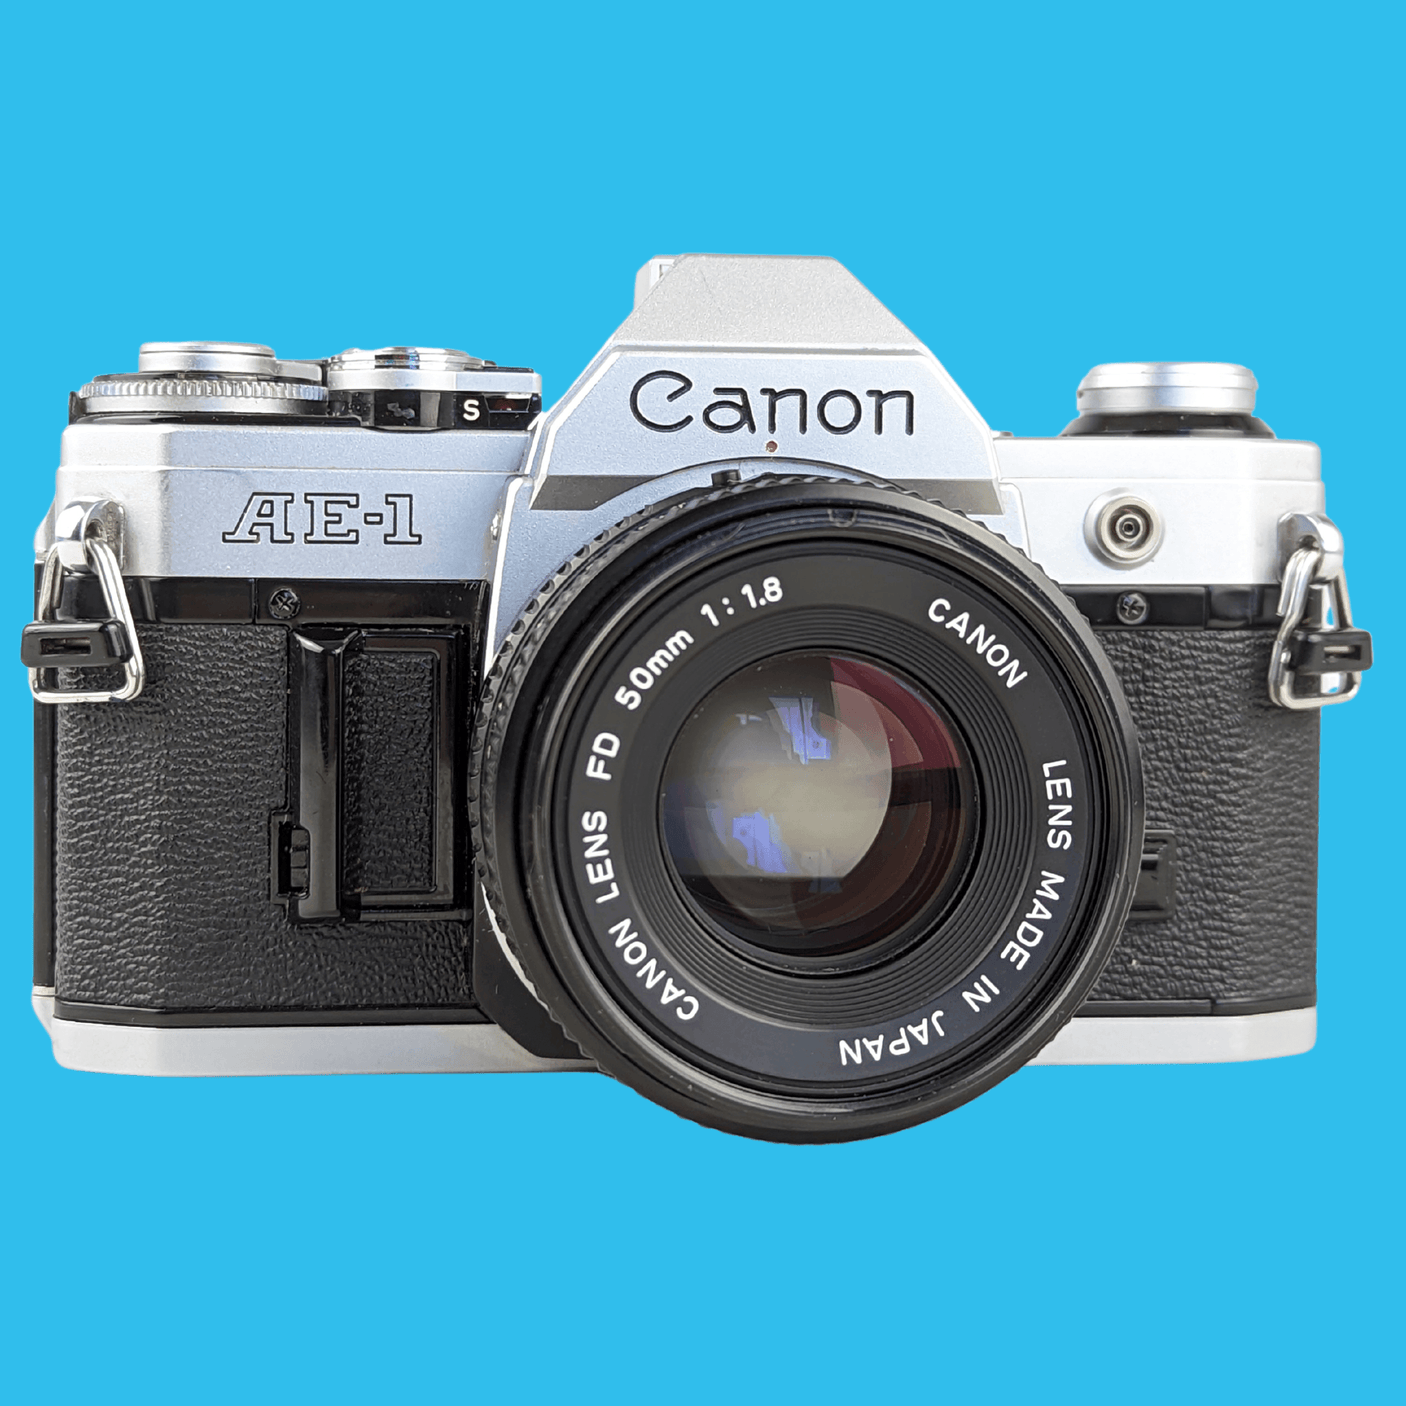 Canon AE-1 35mm SLR Film Camera with Canon Prime Lens